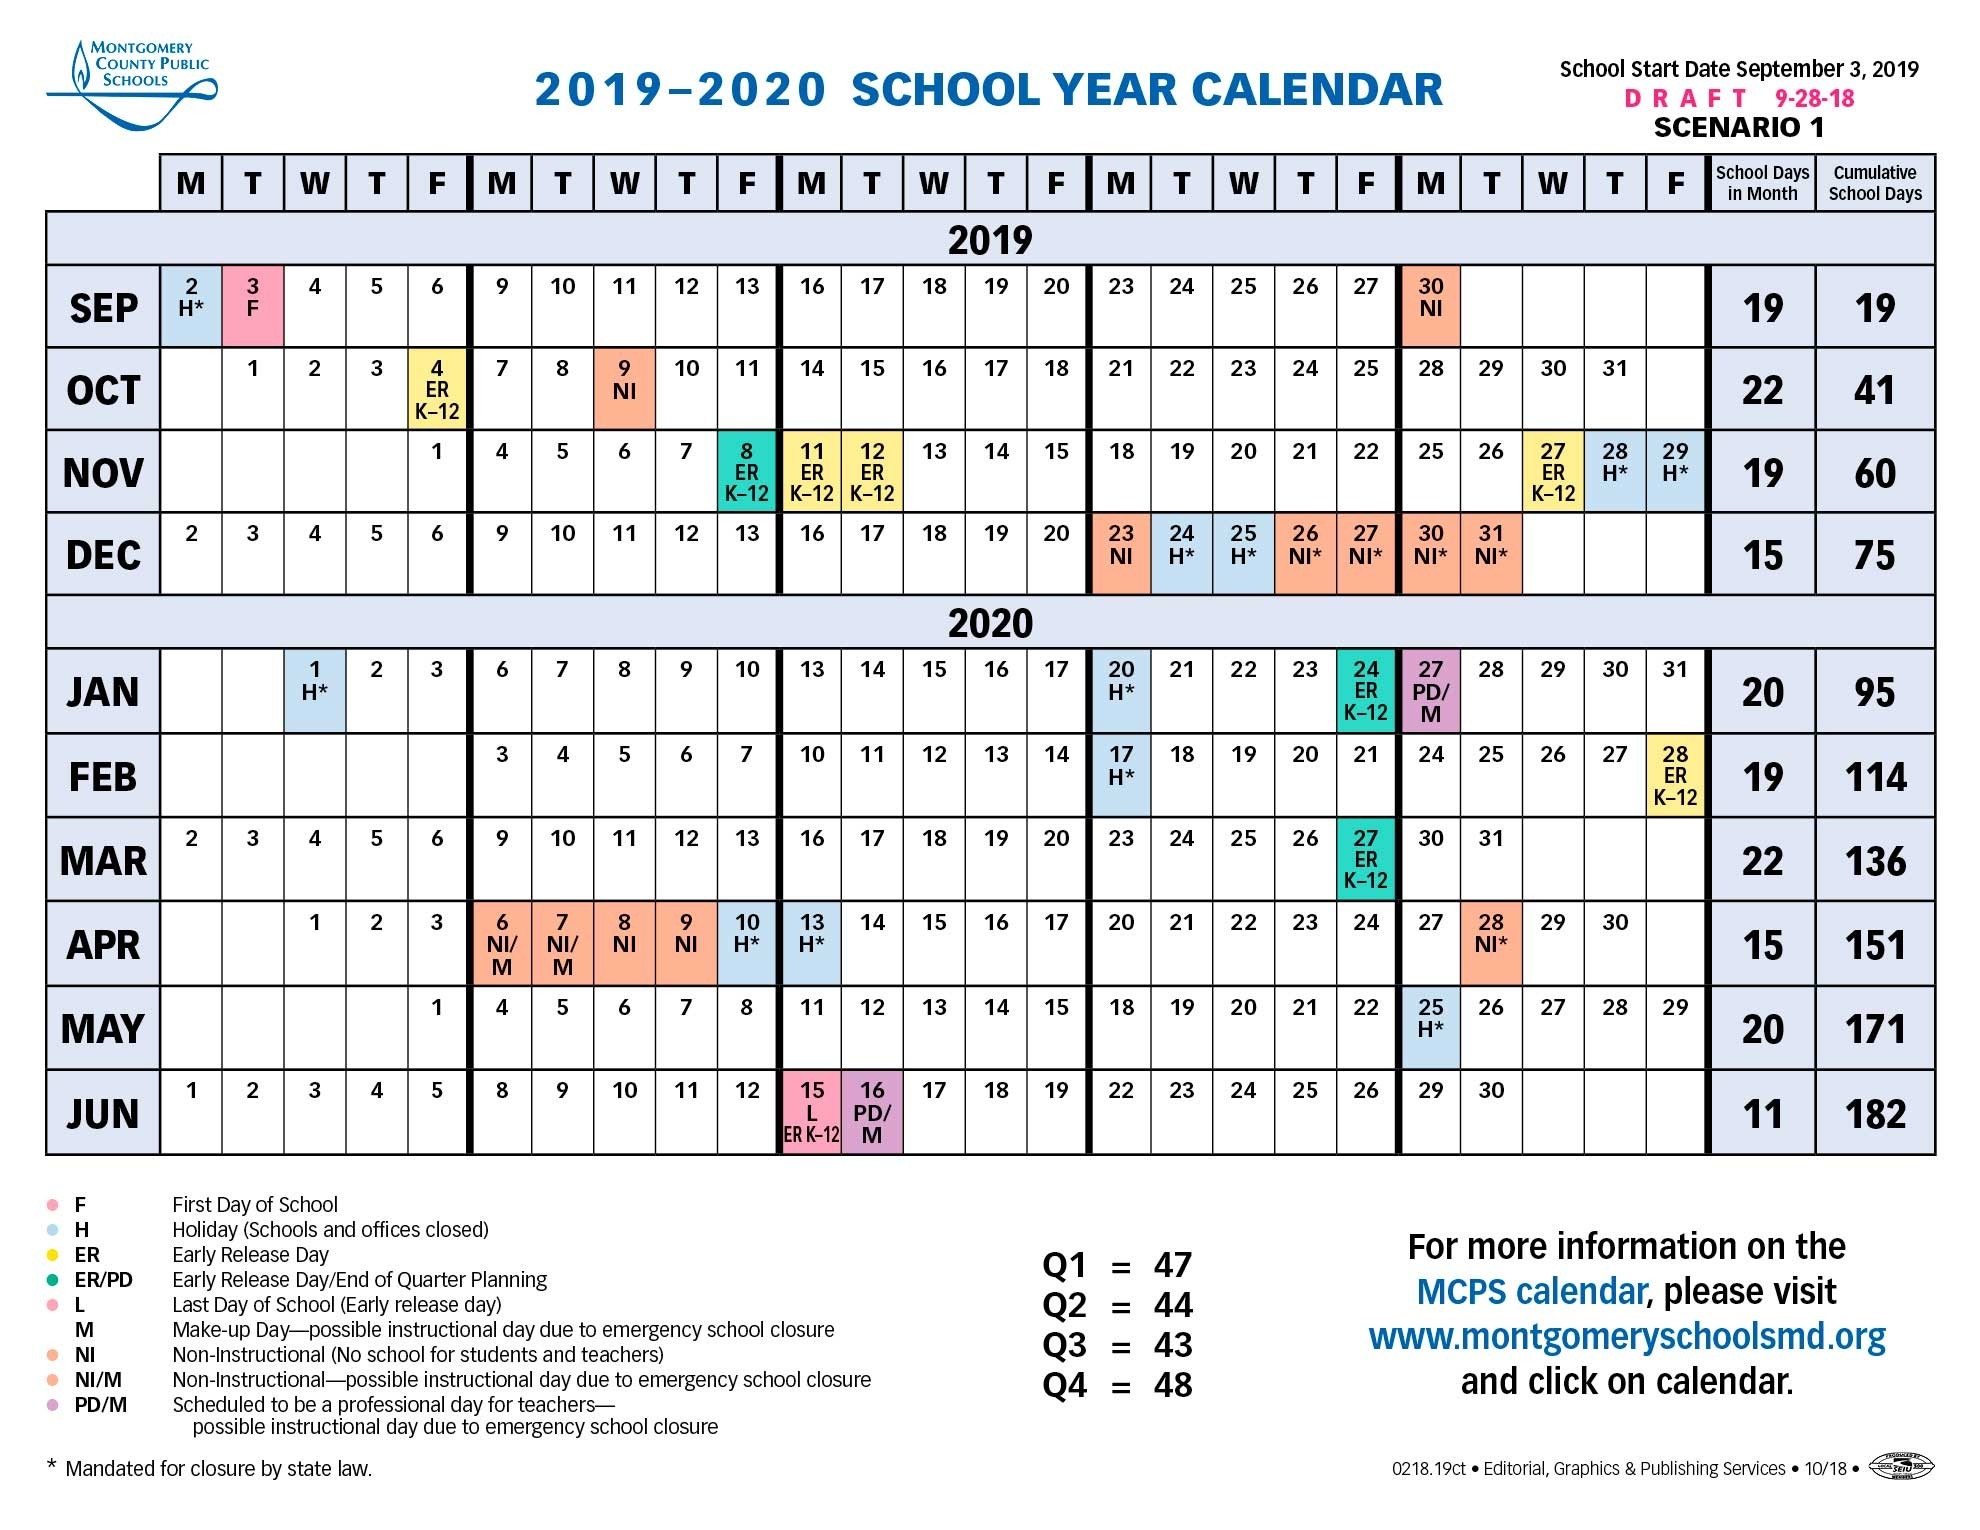 School Board Approves Longer Spring Break For 2019-2020-Calendar Of 2020 Jewish Holidays